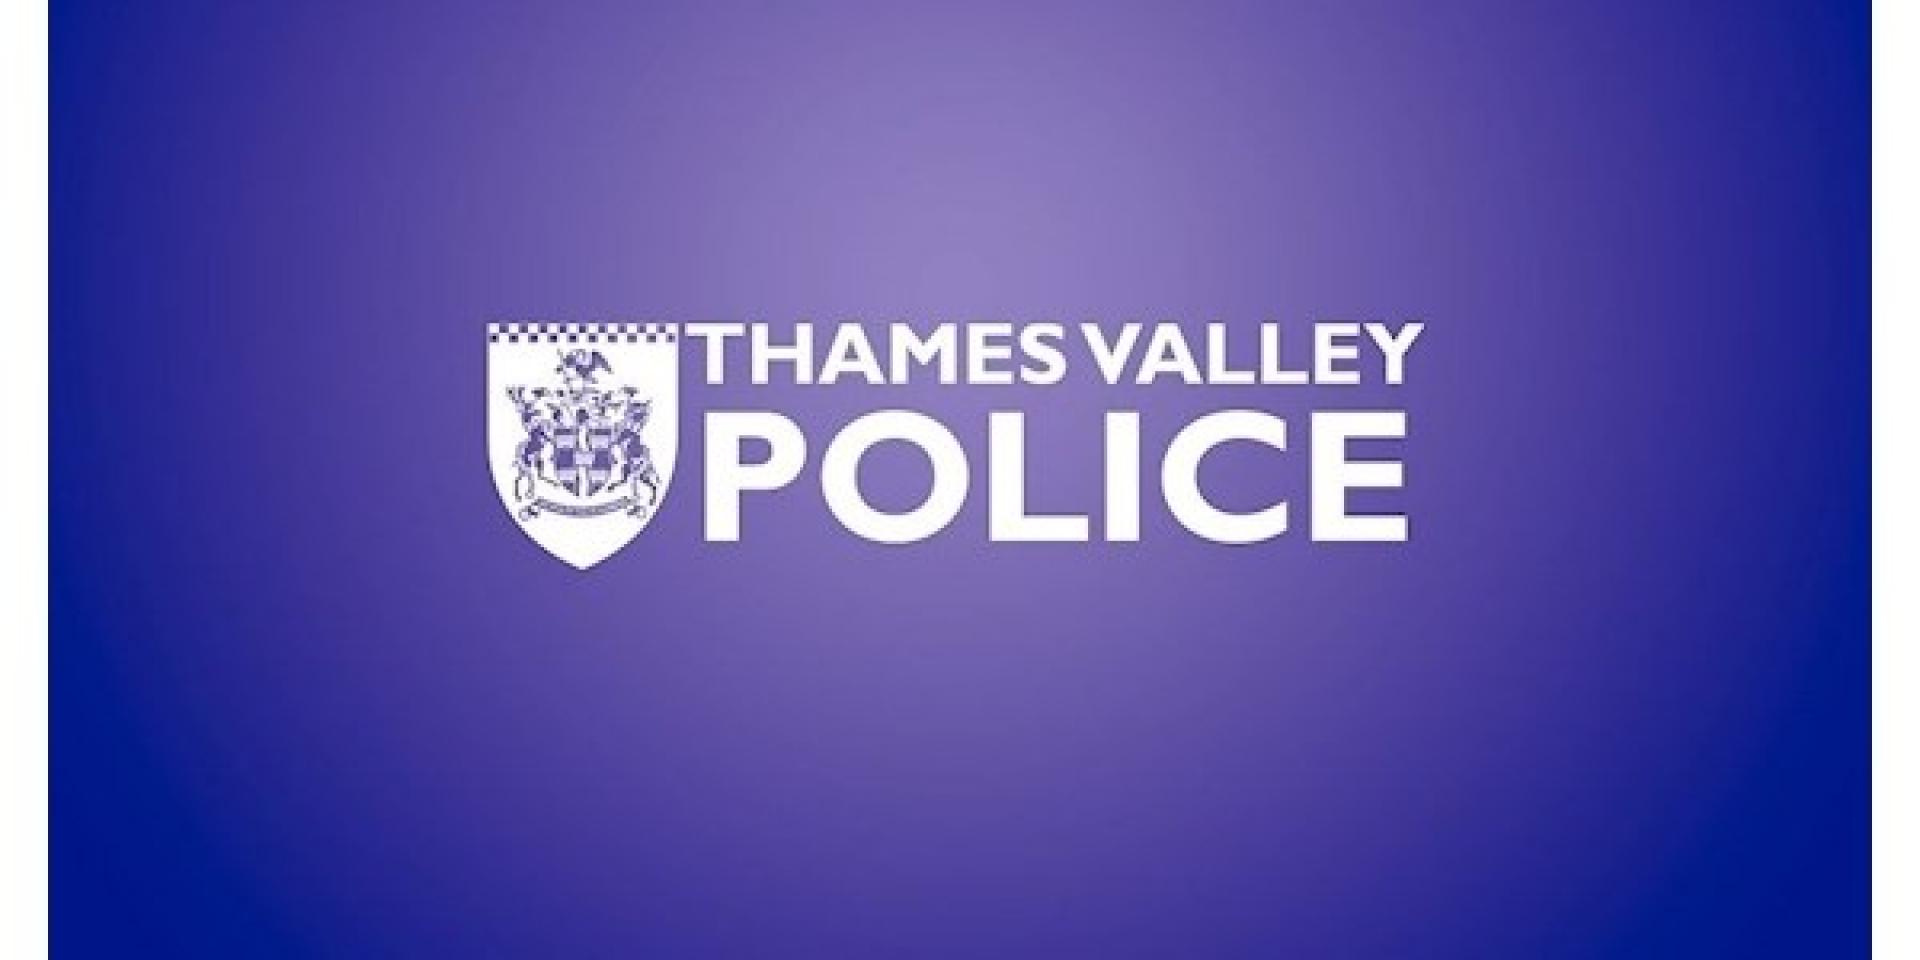 Thomas Valley Police